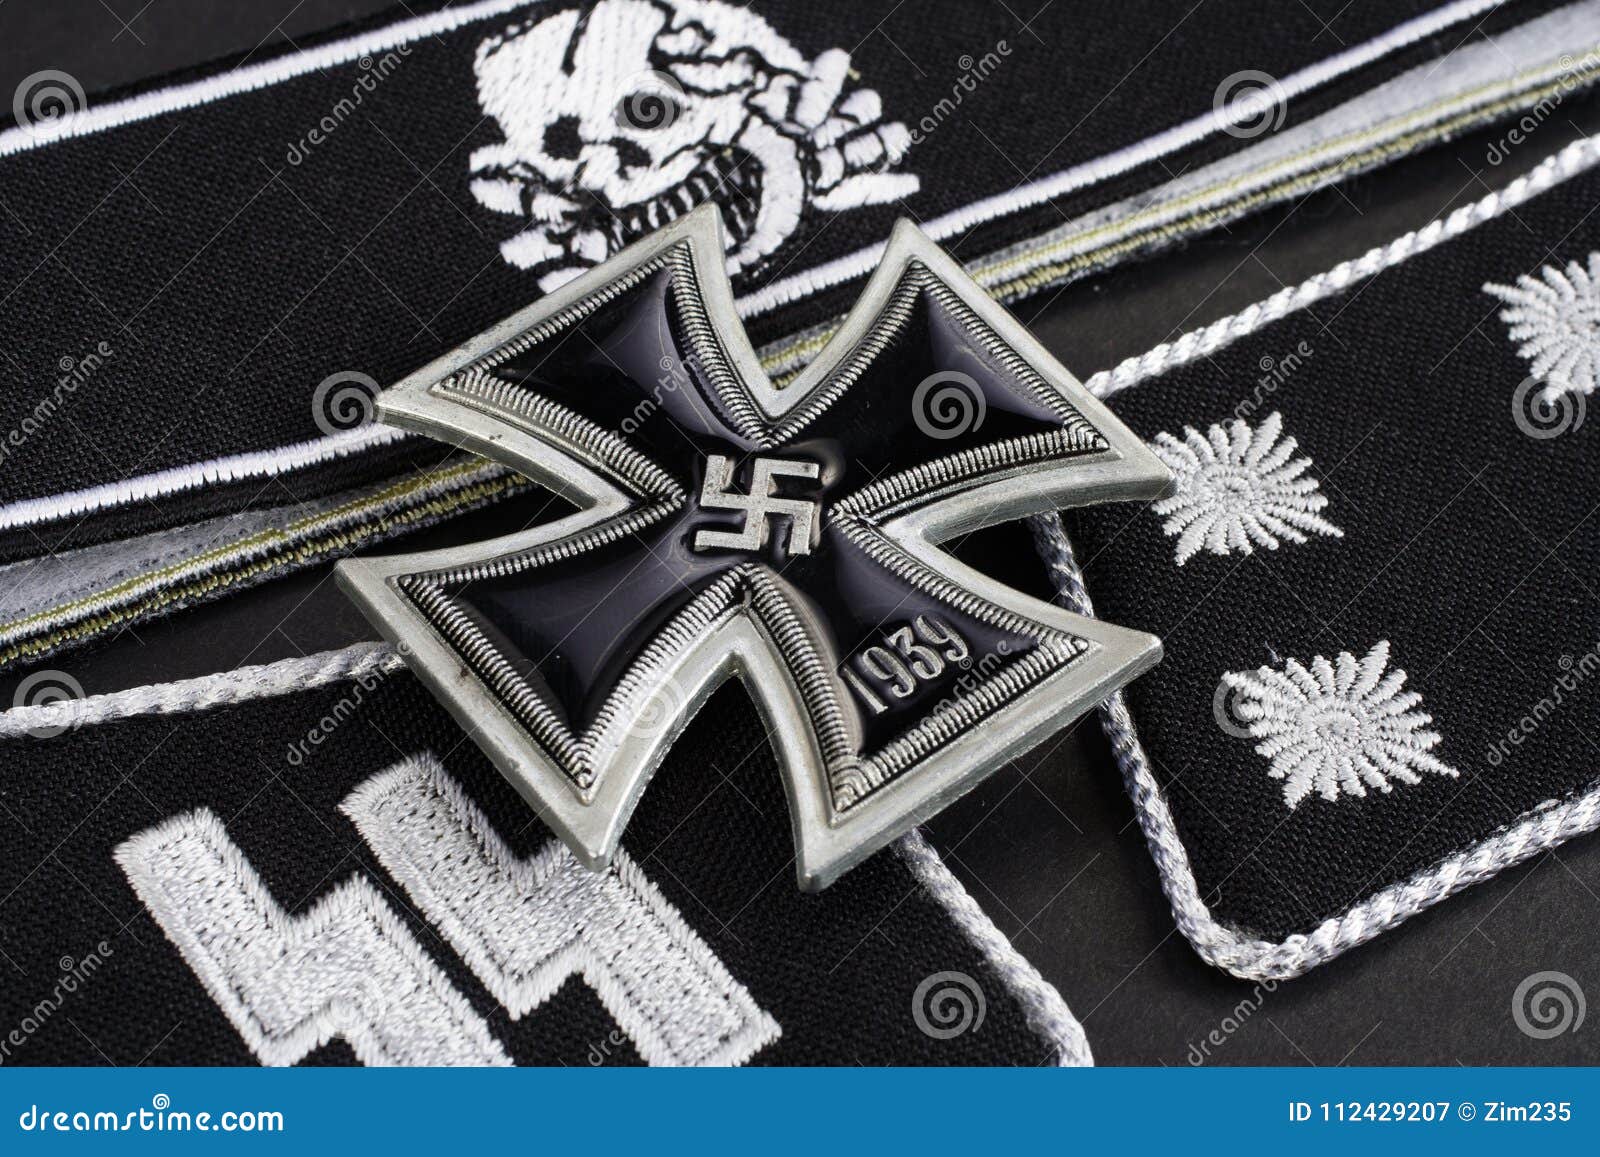 Ww2 German Waffen Ss Military Insignia With Iron Cross Award